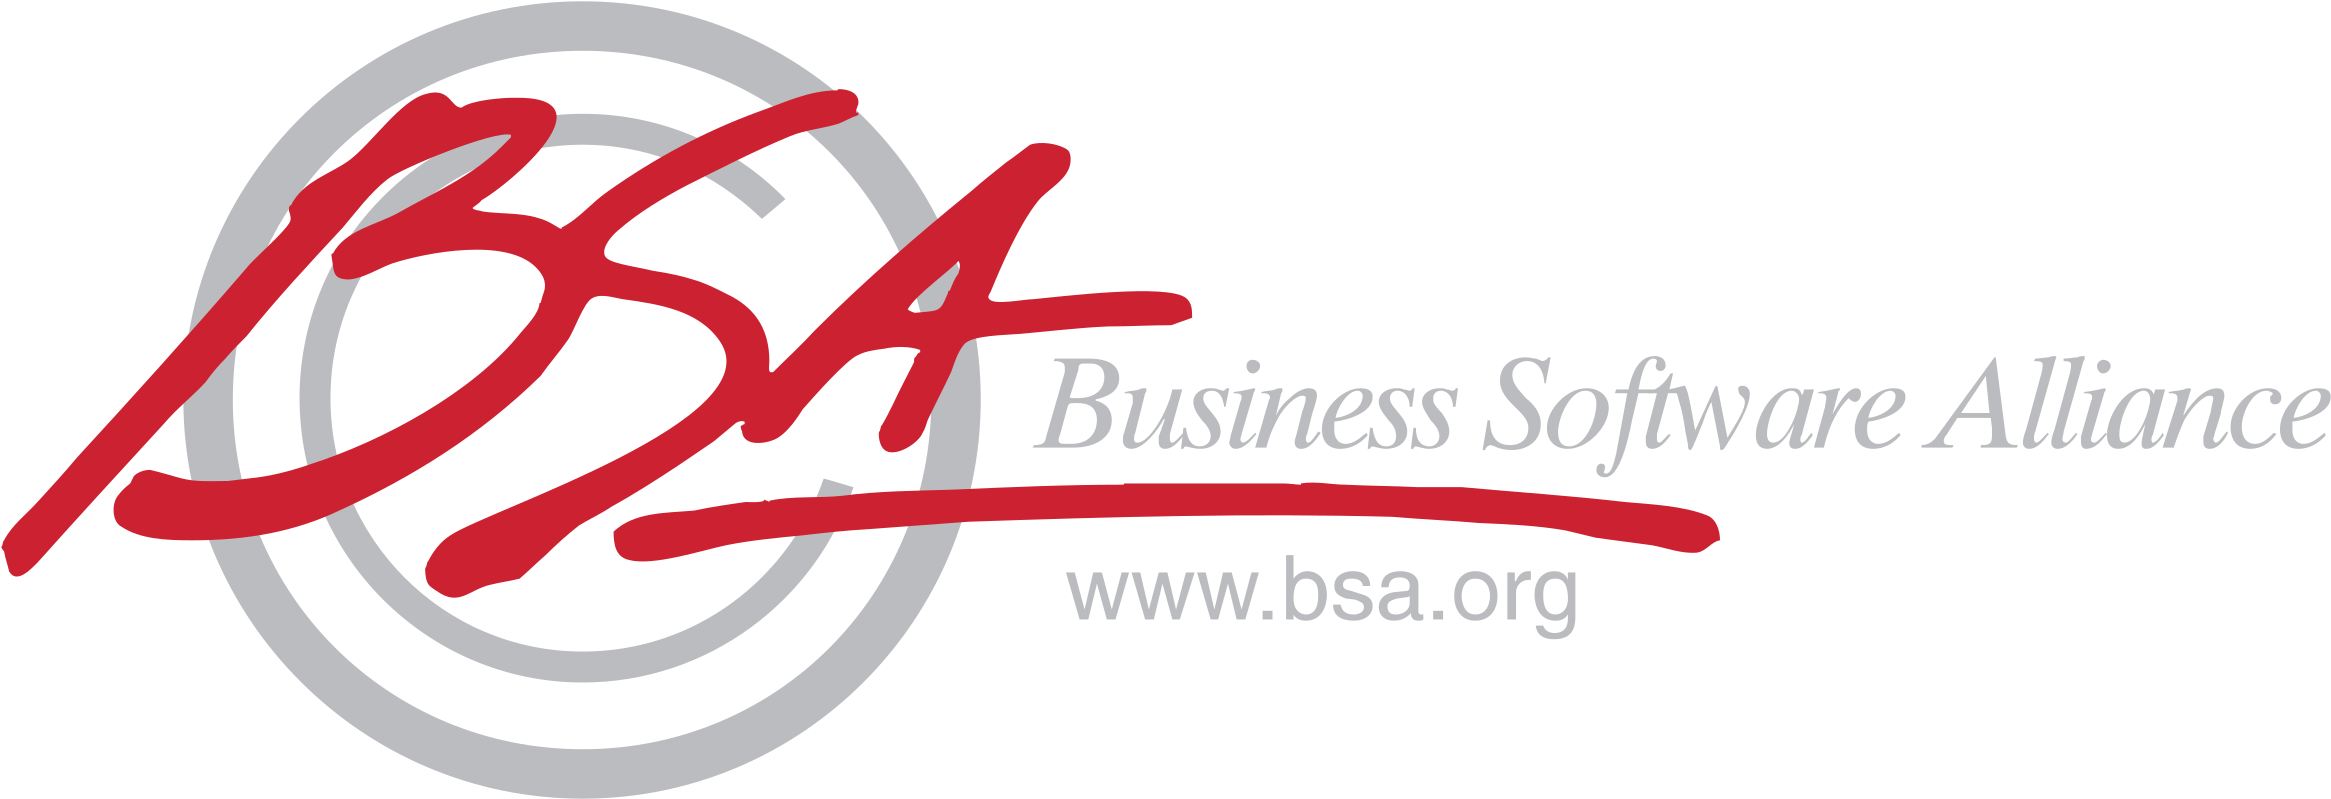 Bsa Logo Png Transparent - Portable Network Graphics (2400x2400), Png Download